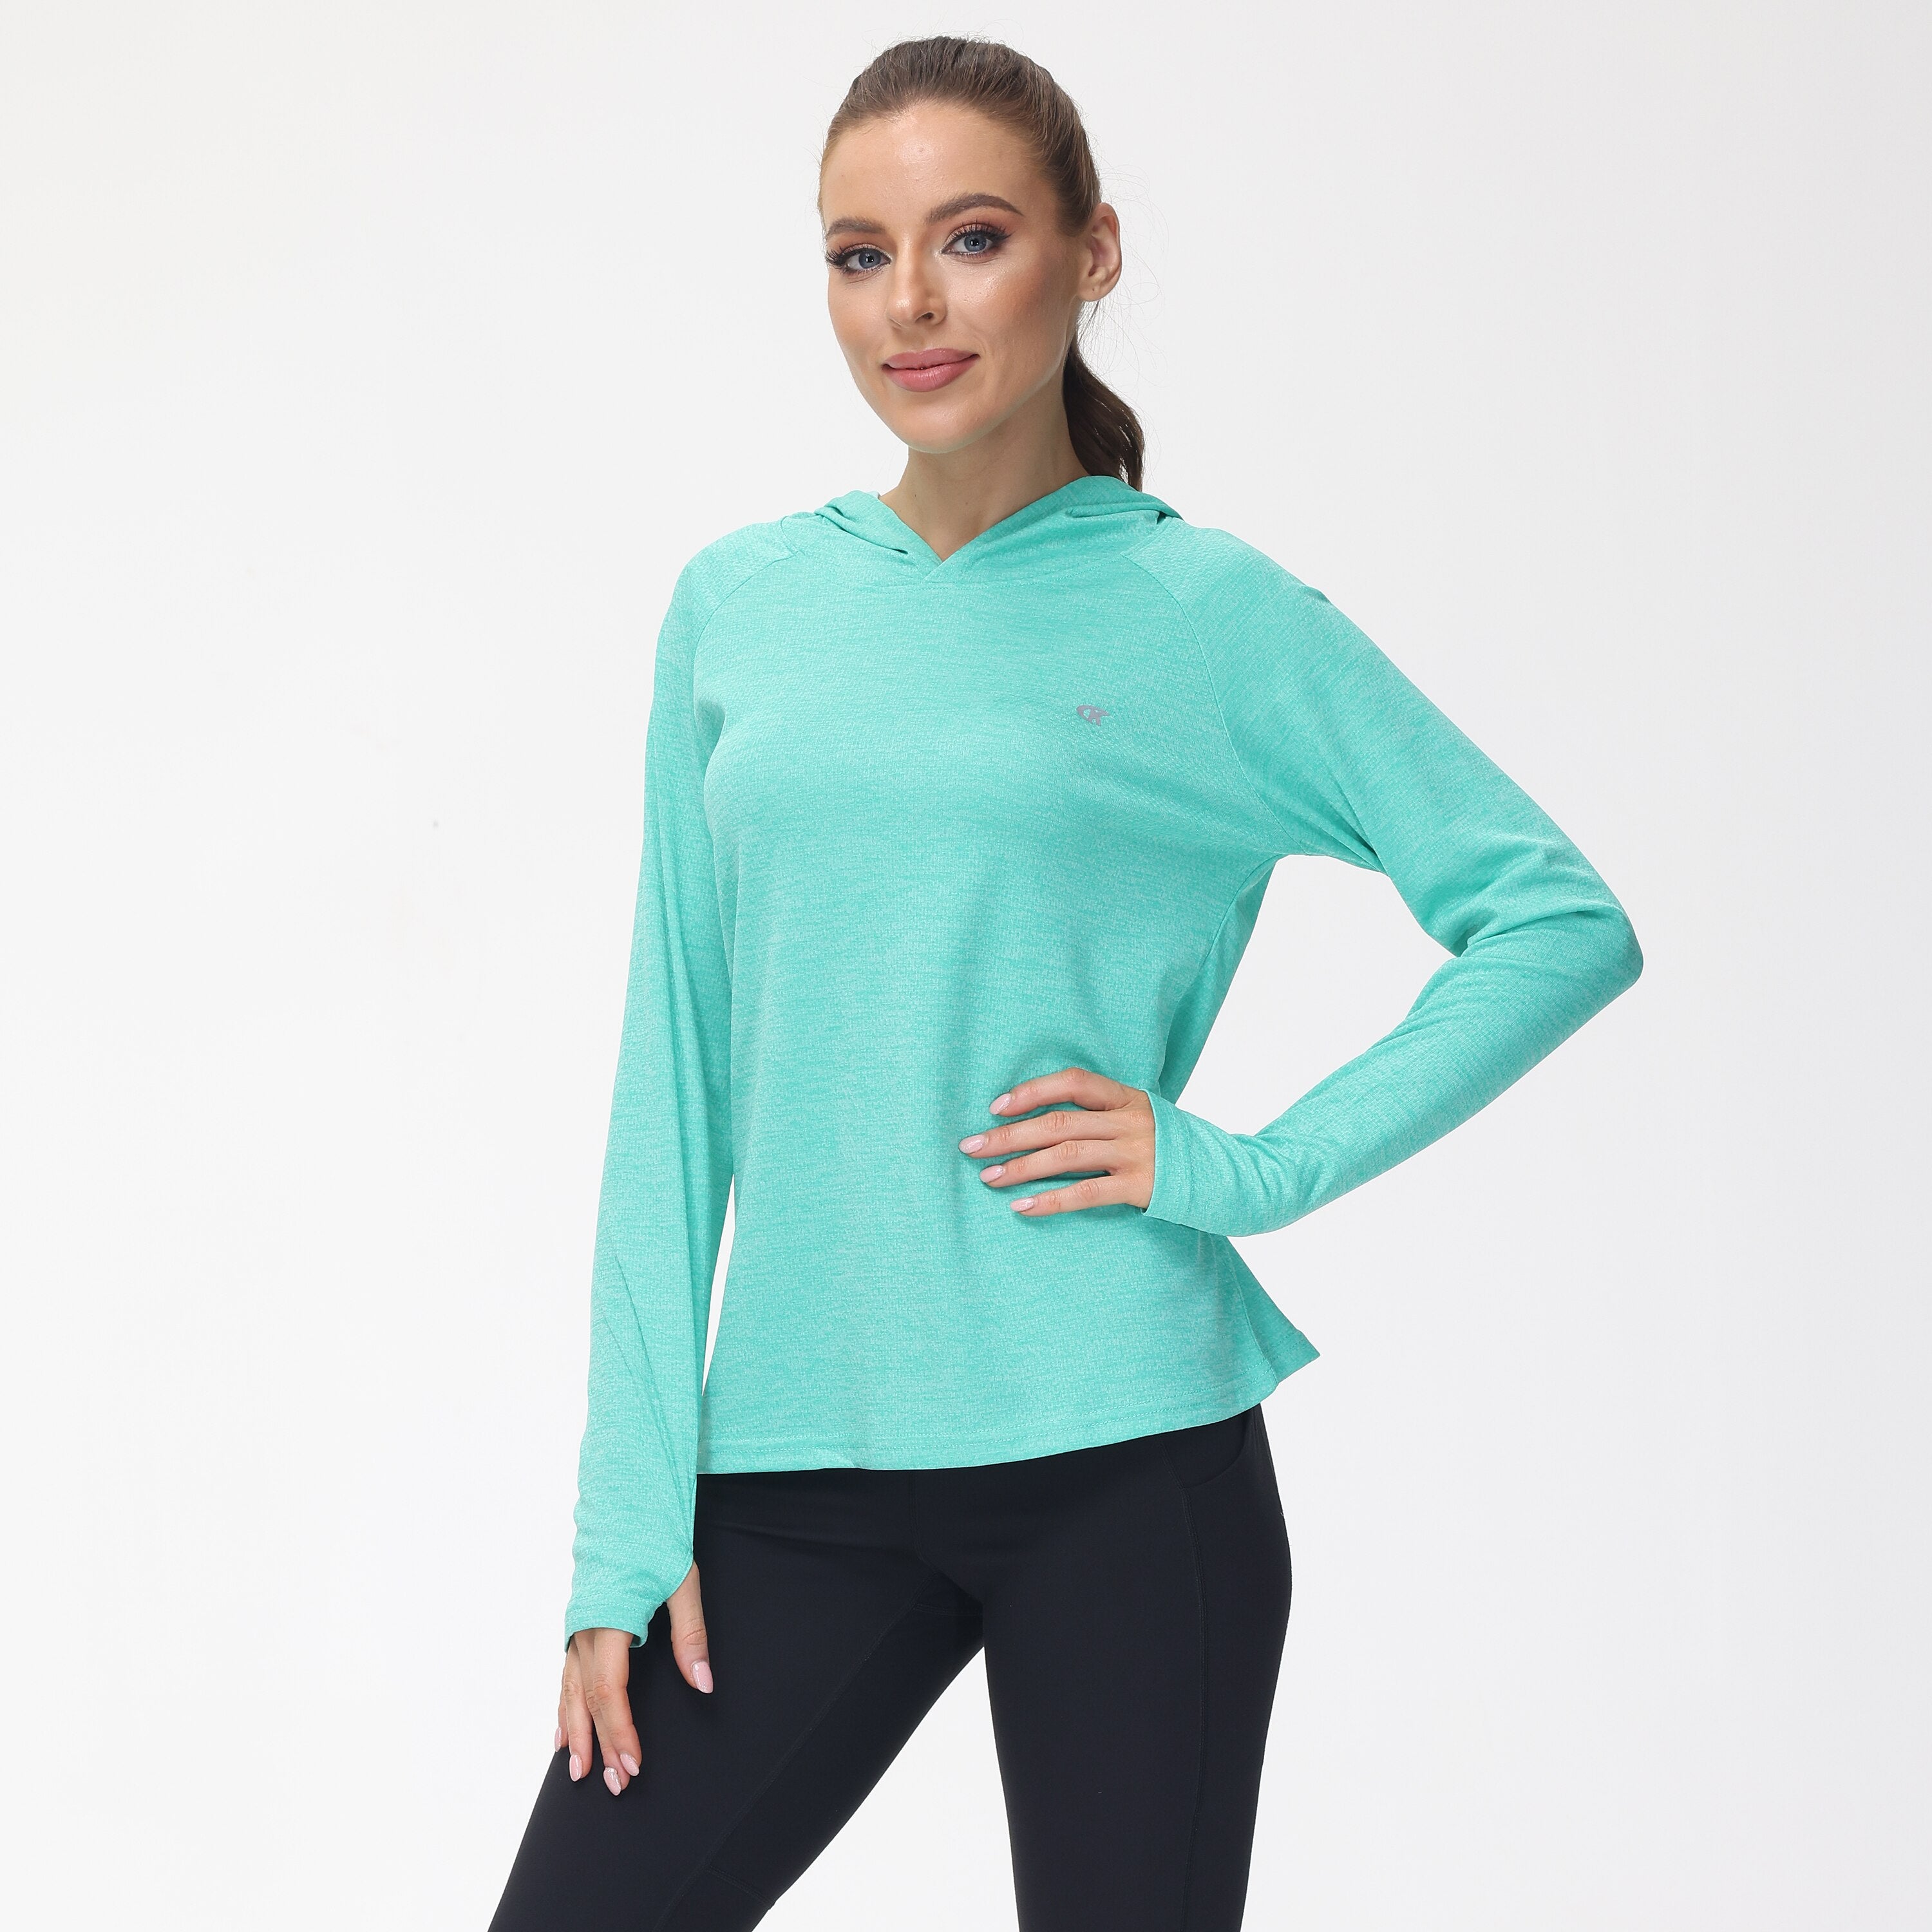 Comprar lightgreen Hiking and Running Long Sleeve T-Shirt Rash Guard UPF 50+ Quick Dry Lightweight For women